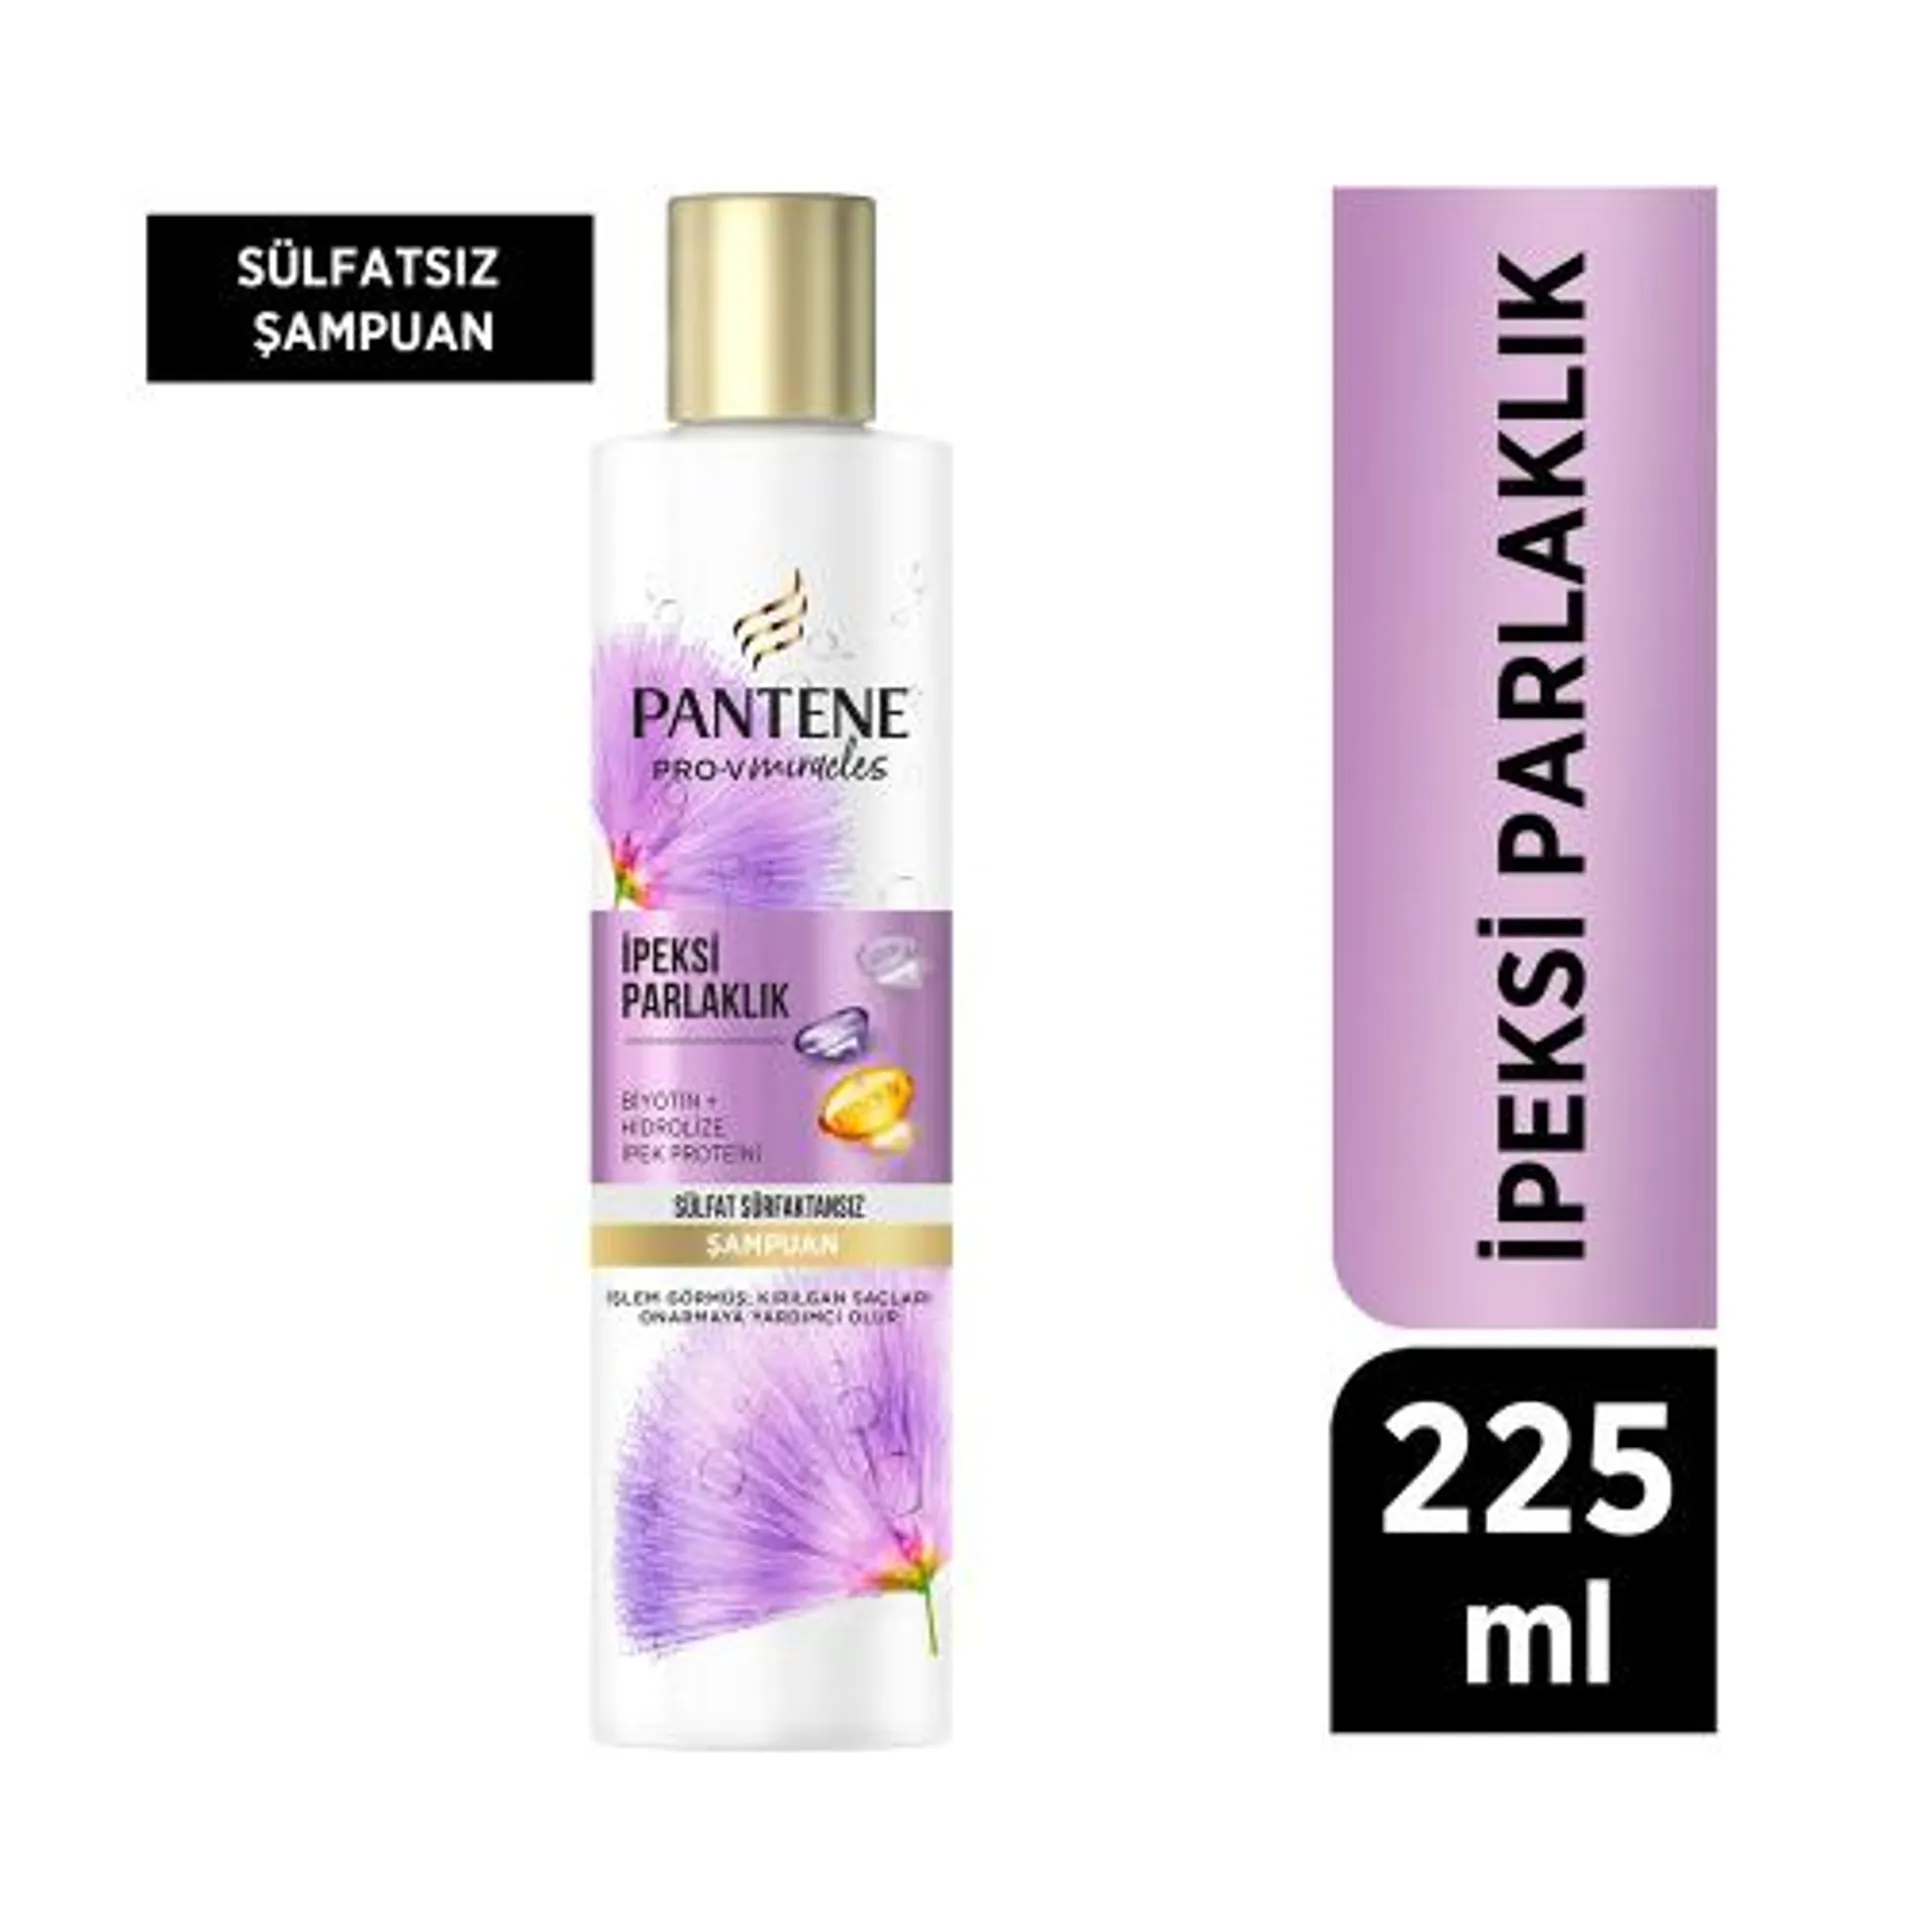 Pantene PRO-V İpeksi Parlaklık Sülfatsız Şampuan 225 Ml